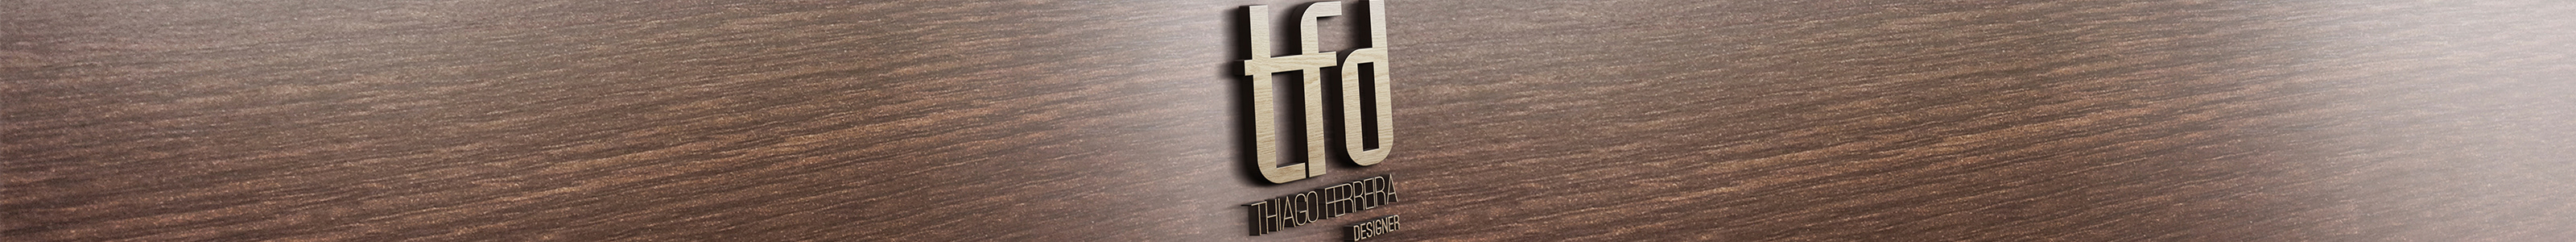 Thiago Ferreira profil başlığı